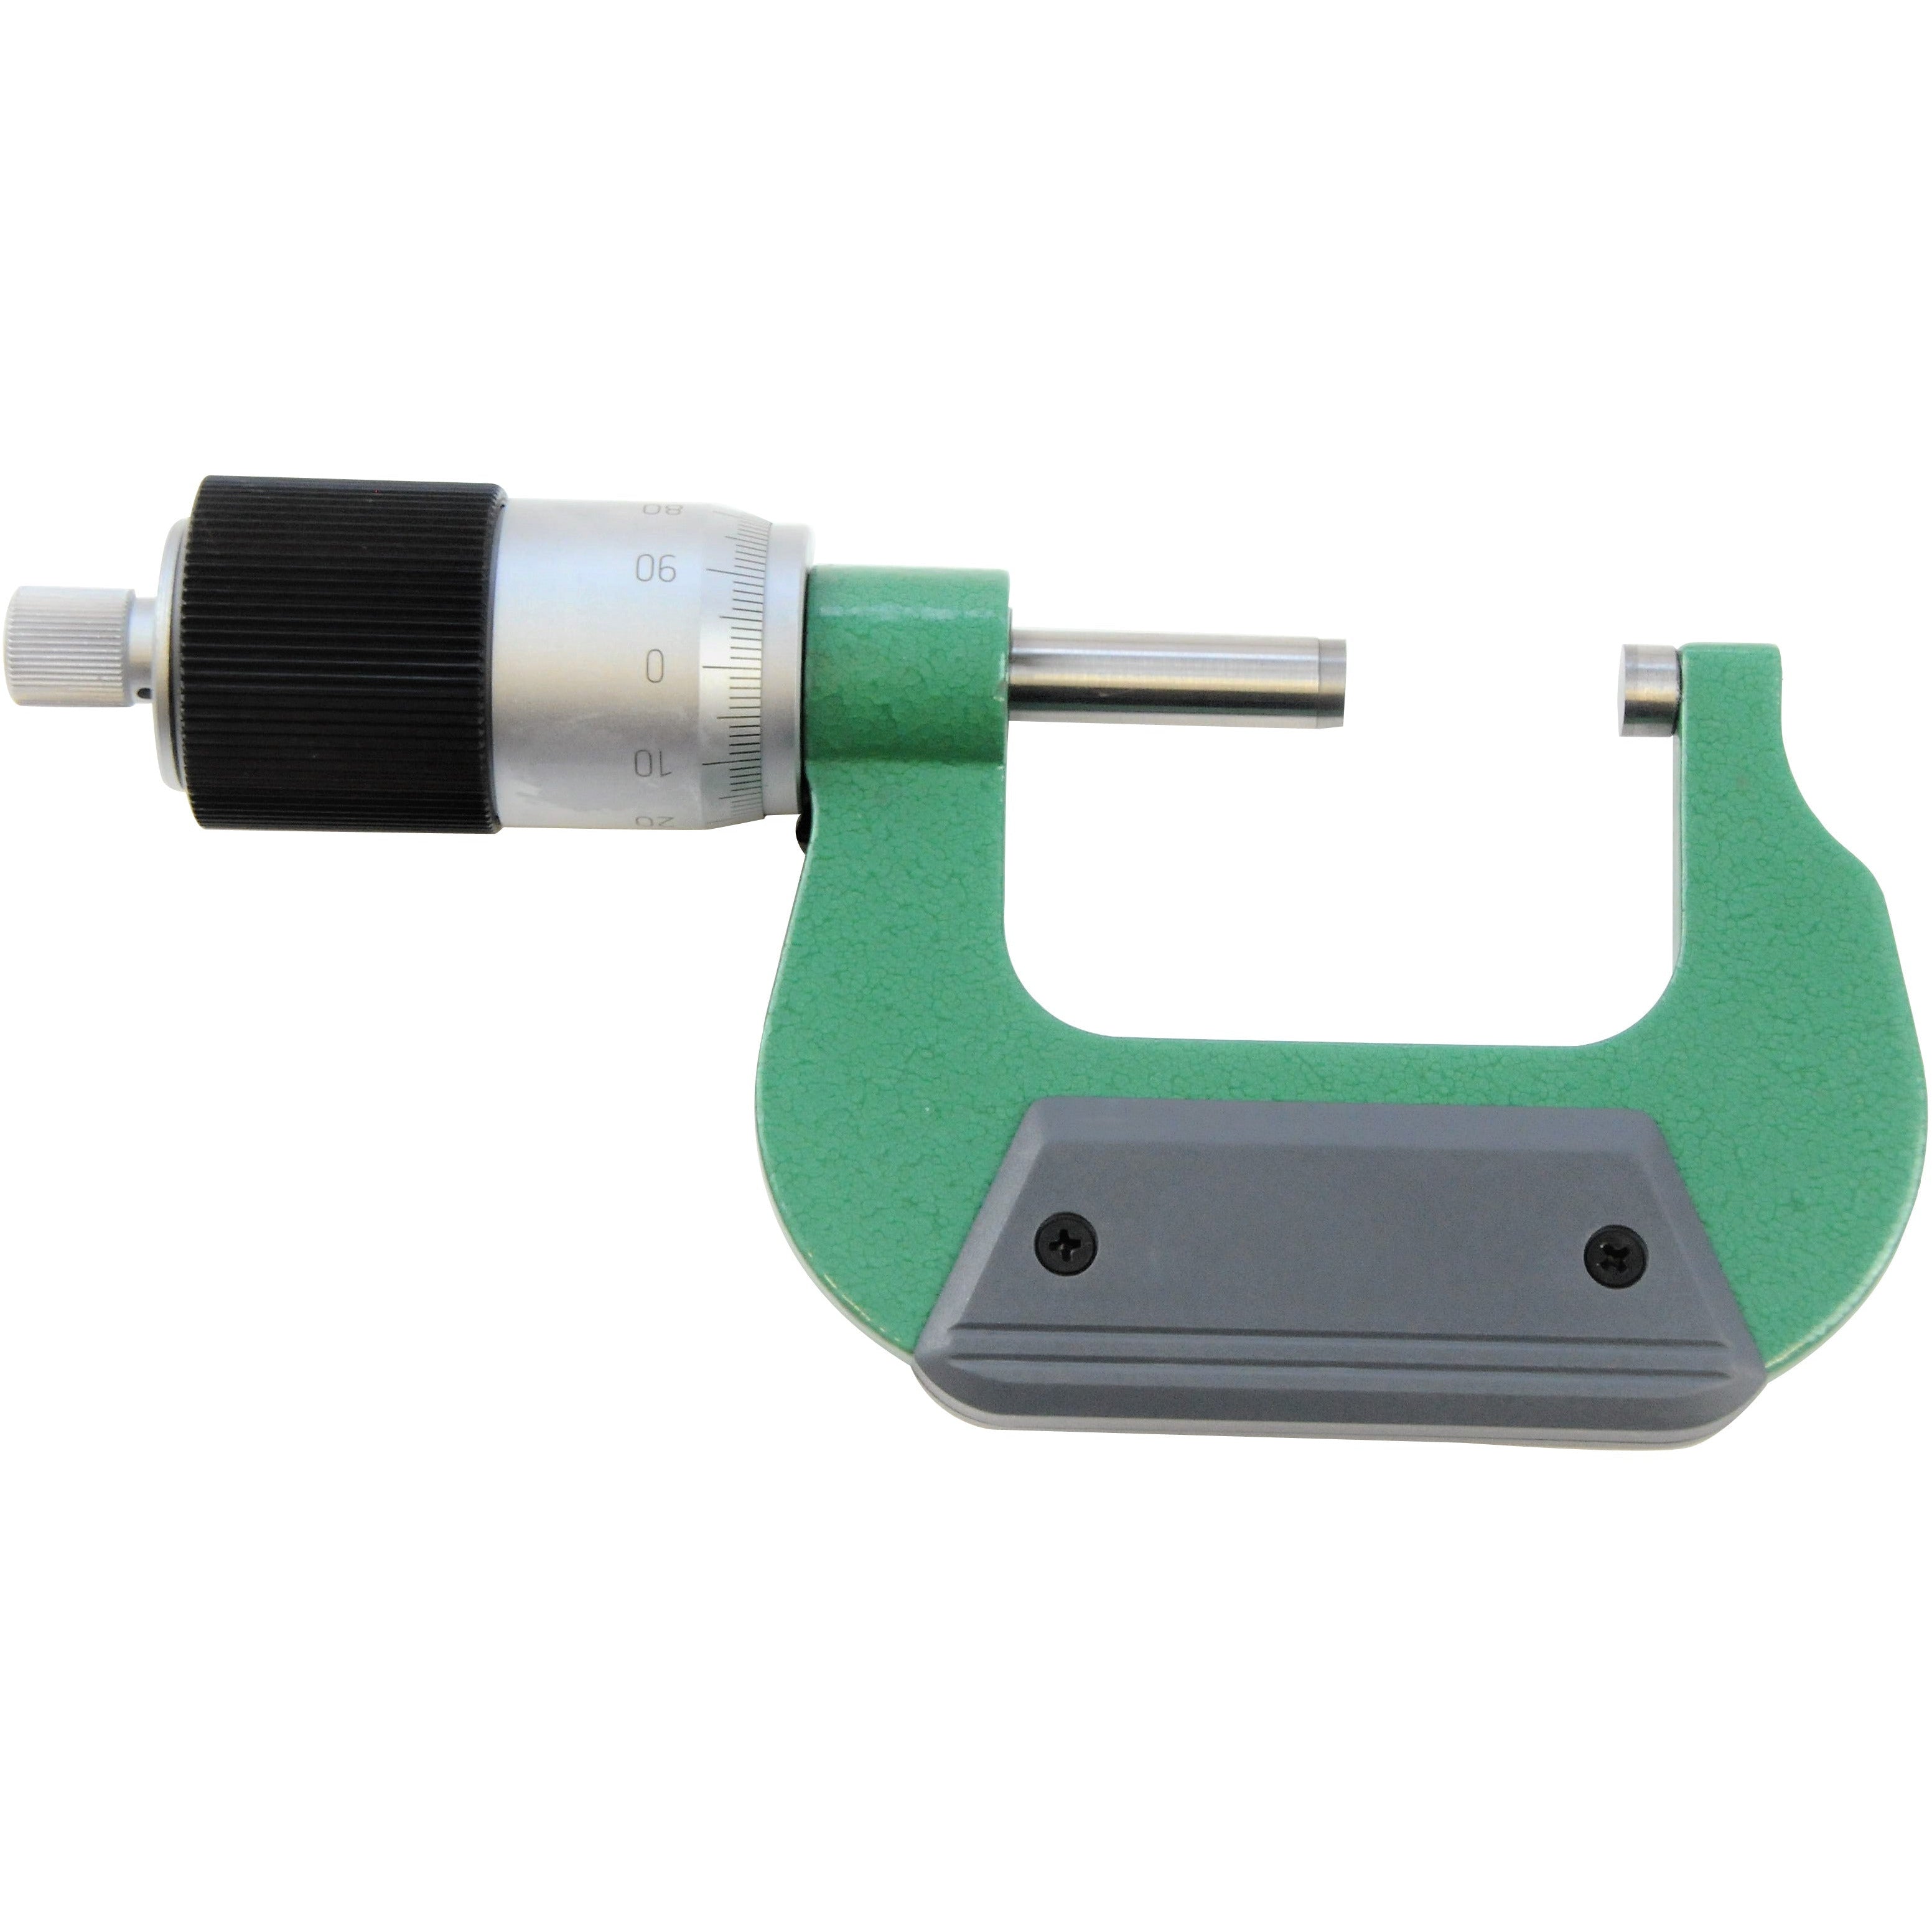 Insize Outside Micrometer Quick Feeding 3208-50B 25-50mm